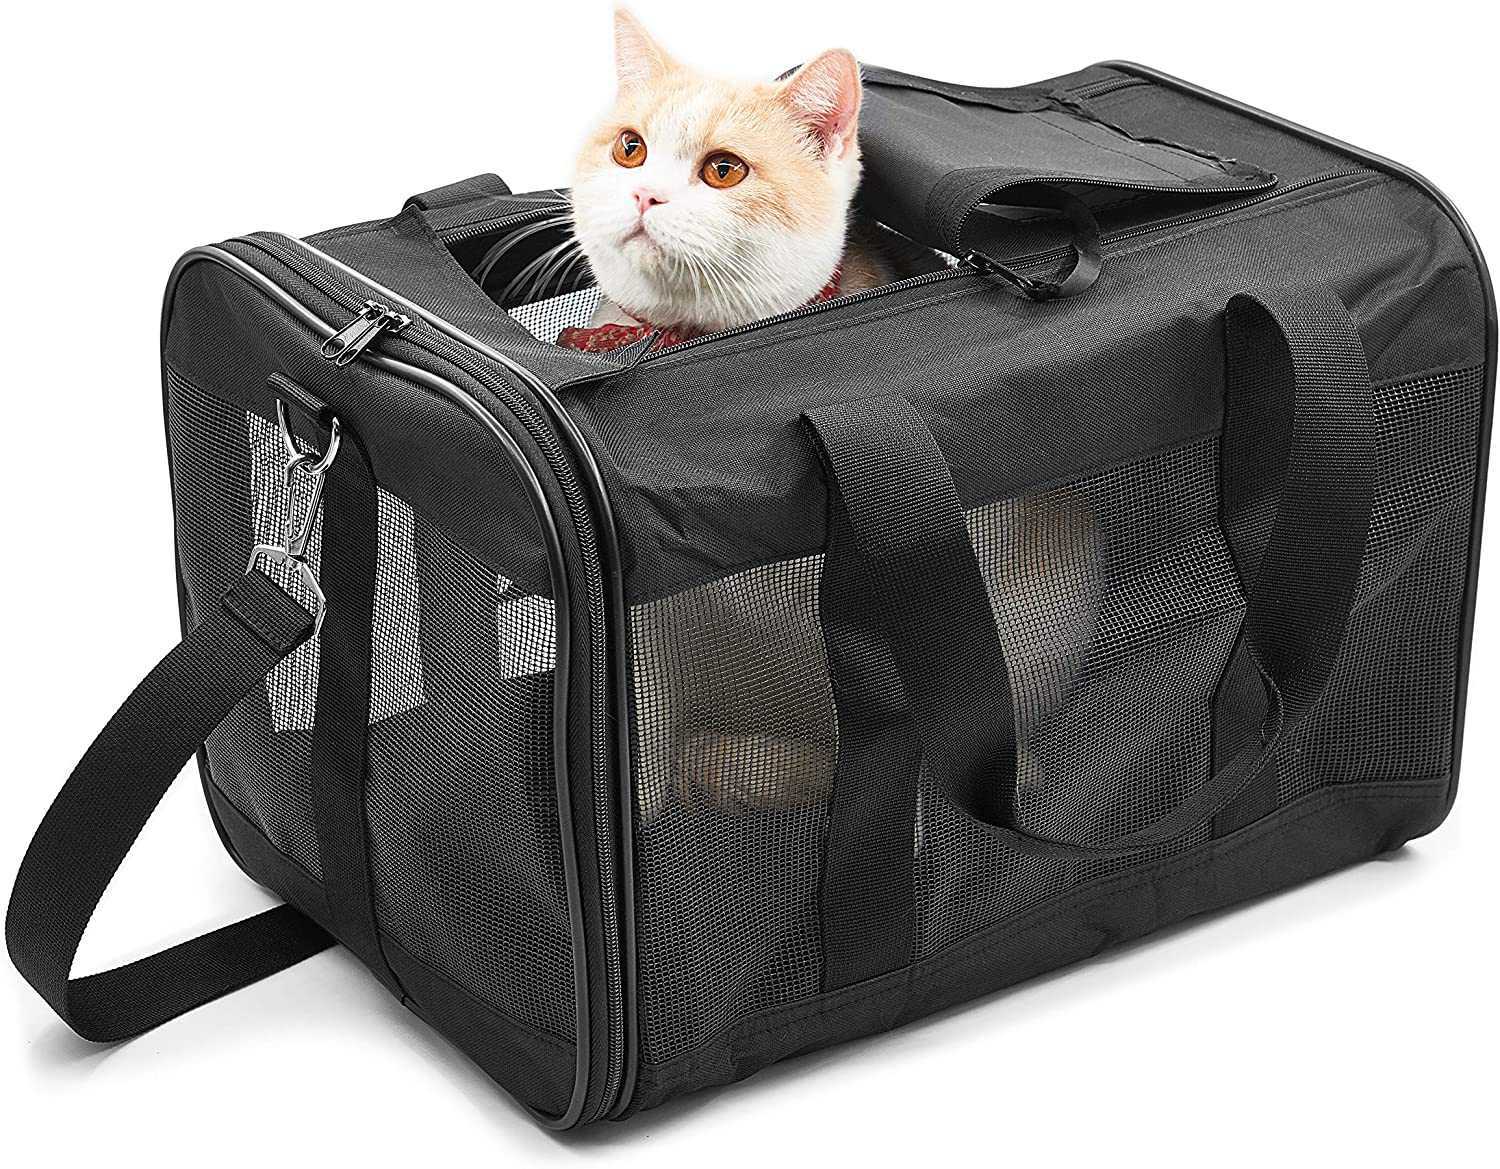 Basics Medium Soft-Sided Mesh Pet Airline Travel Carrier Bag - 16.5  x 9.5 x 10 Inches, Black